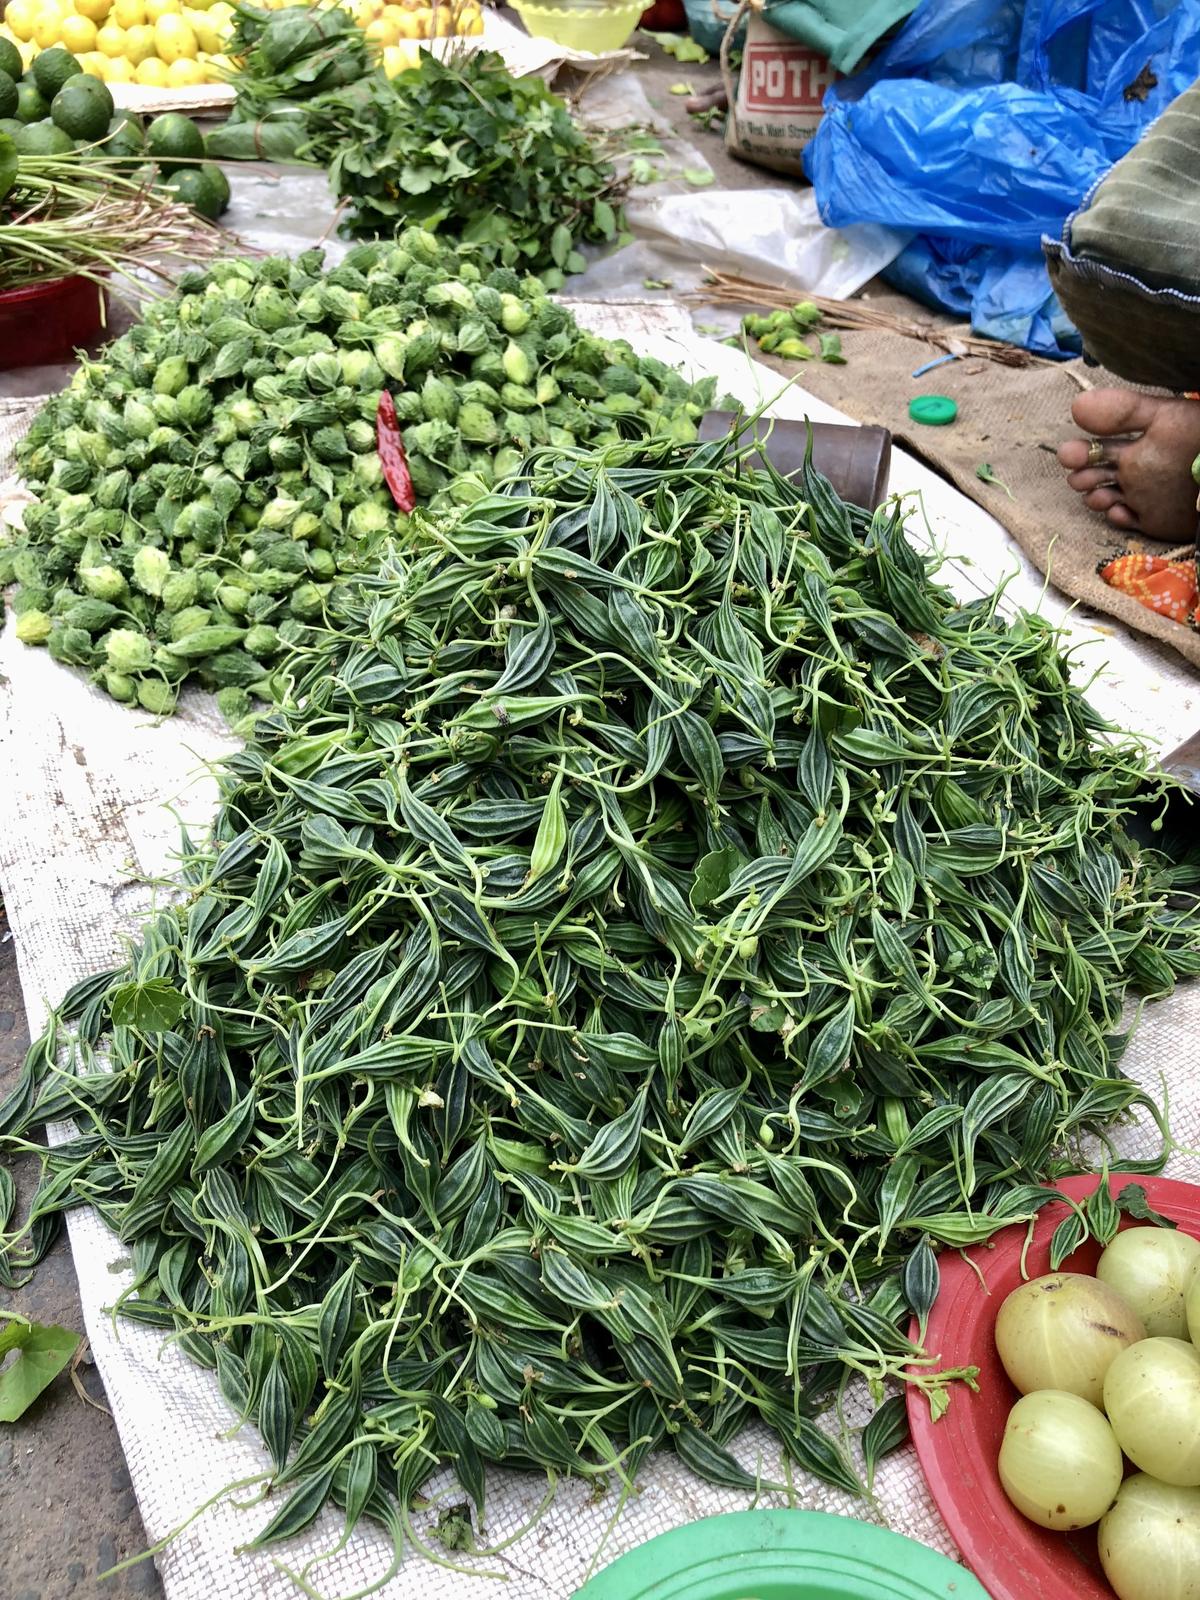 Avarakkai at a roadside market in Madurai, Tamil Nadu